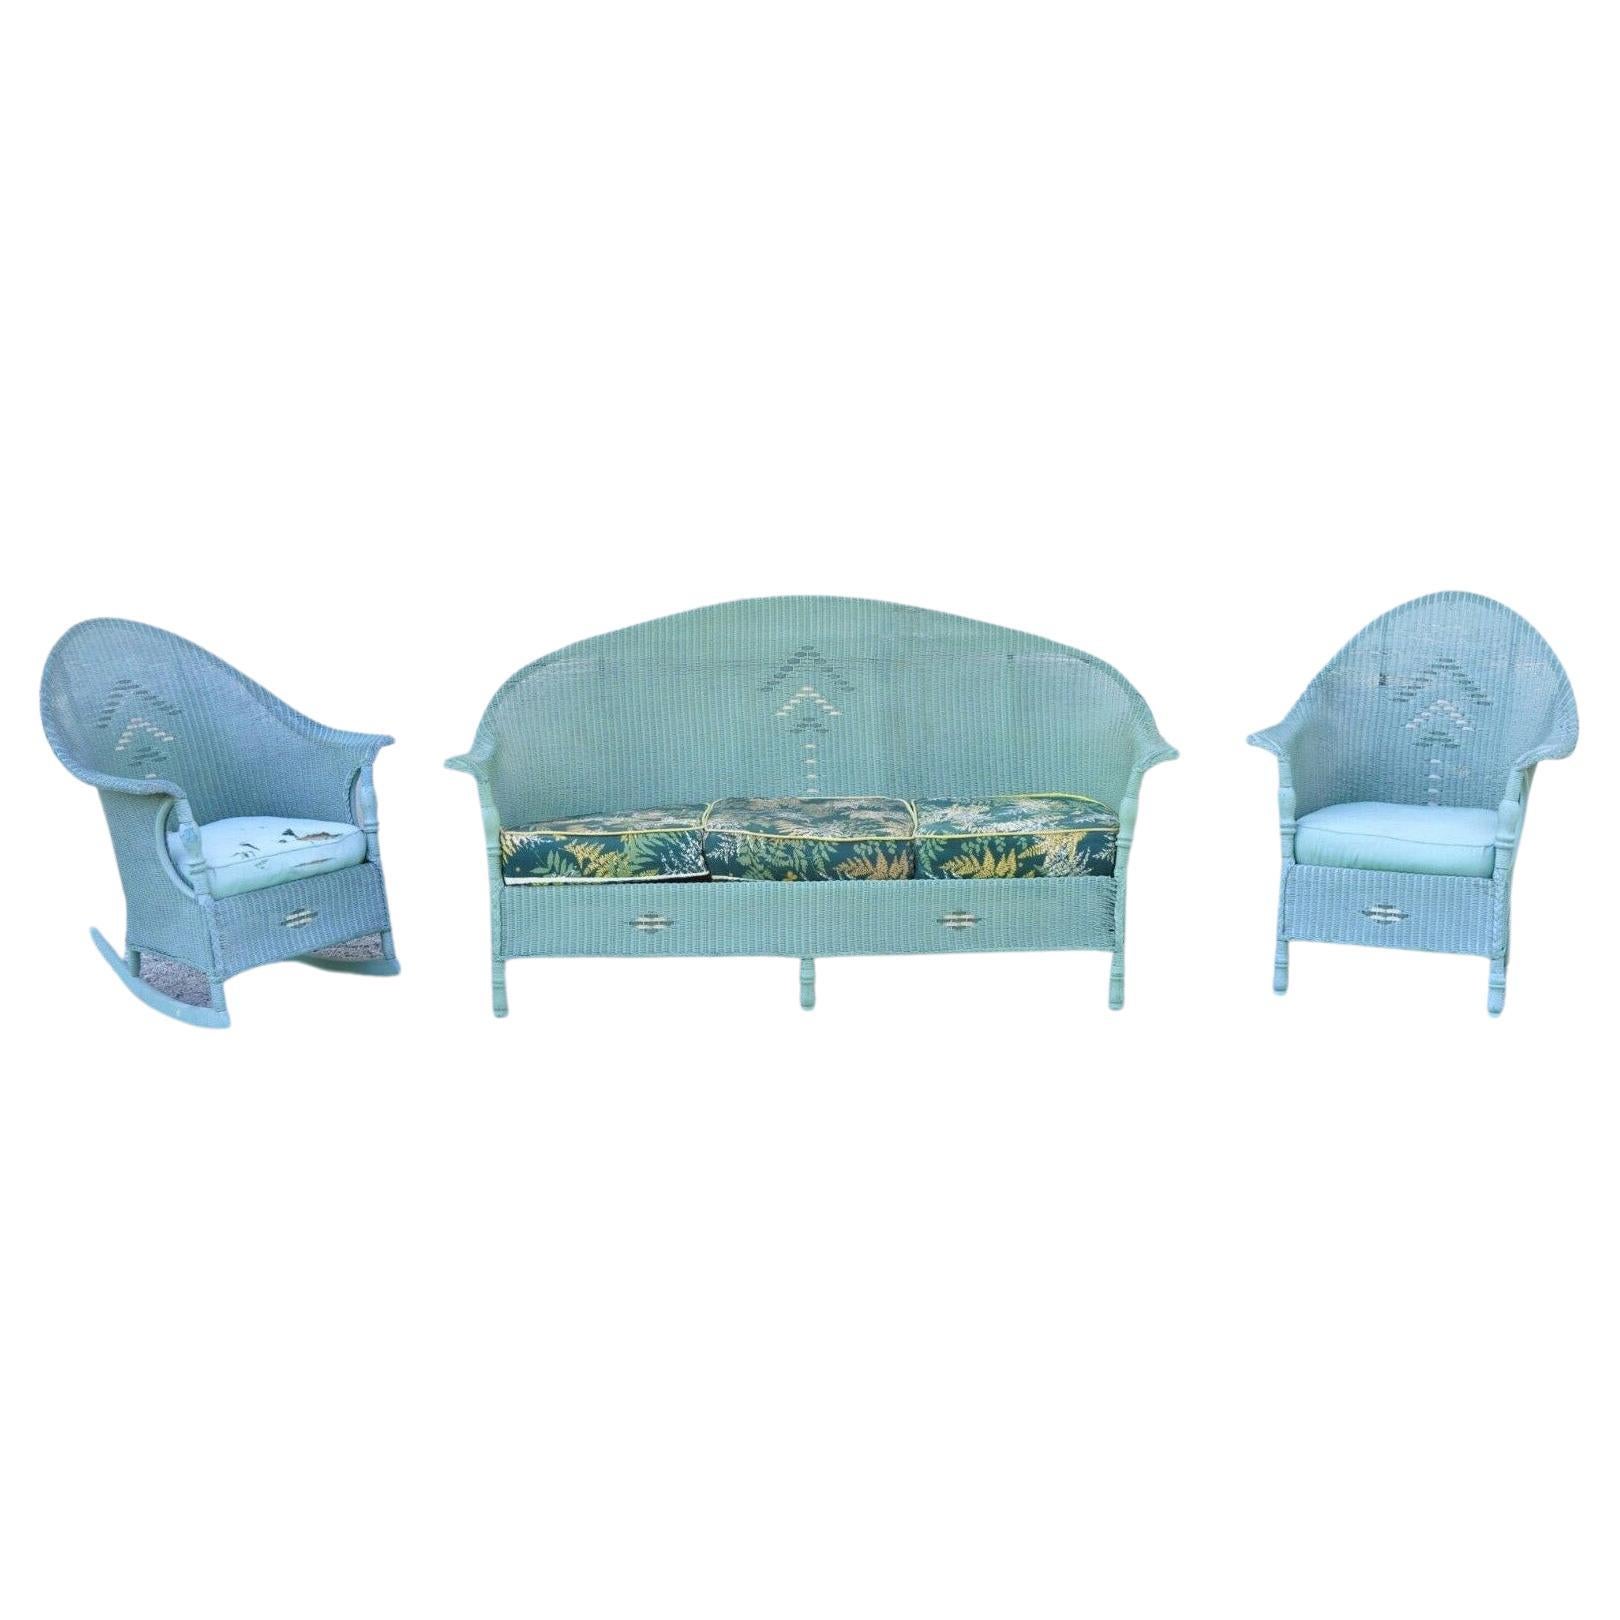 Victorian Blue Green Wovener Sunroom Sofa Rocking Chair Lounge Chair 3 Pcs